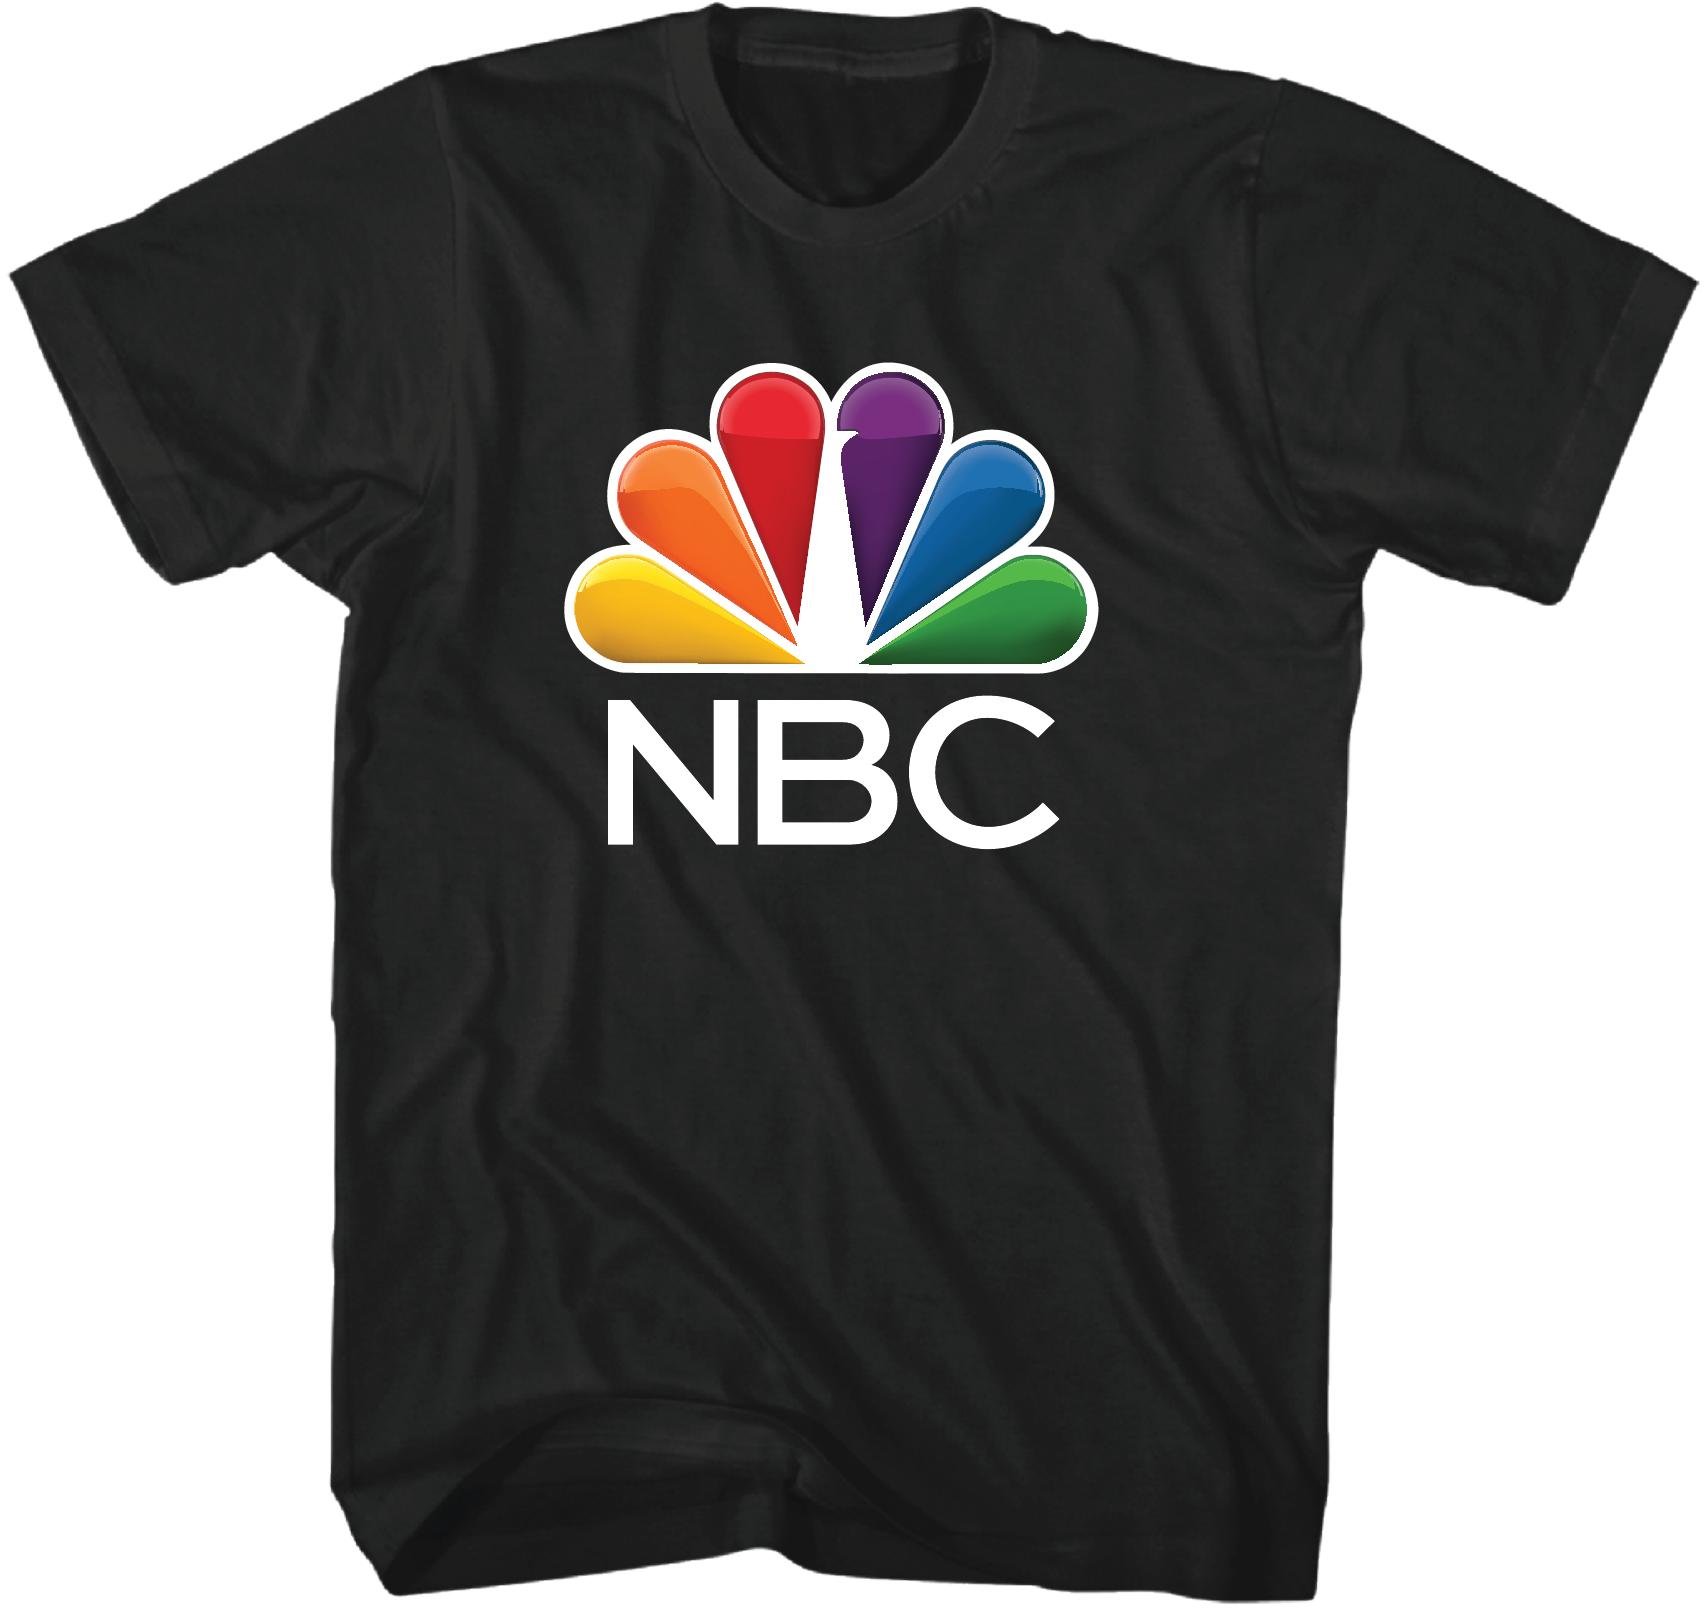 NBC / SOFTHAND SCREEN PRINT ON BLACK / SHORT SLEEVE TEE